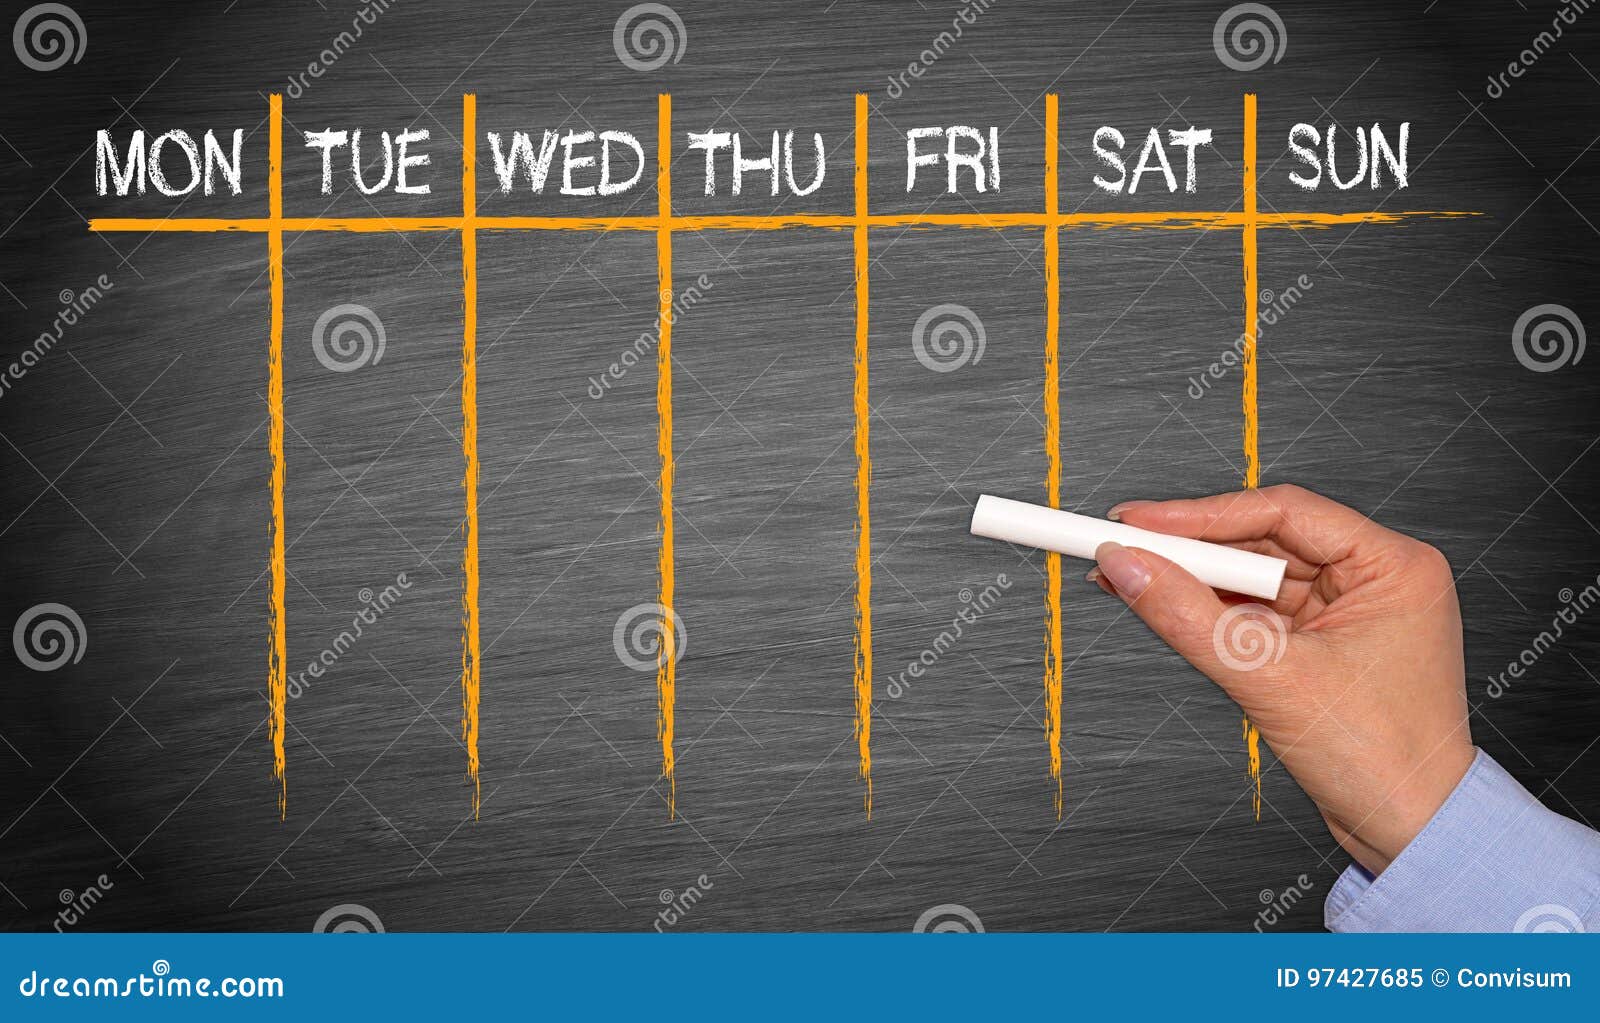 weekly calendar - female hand with chalk writing on blackboard